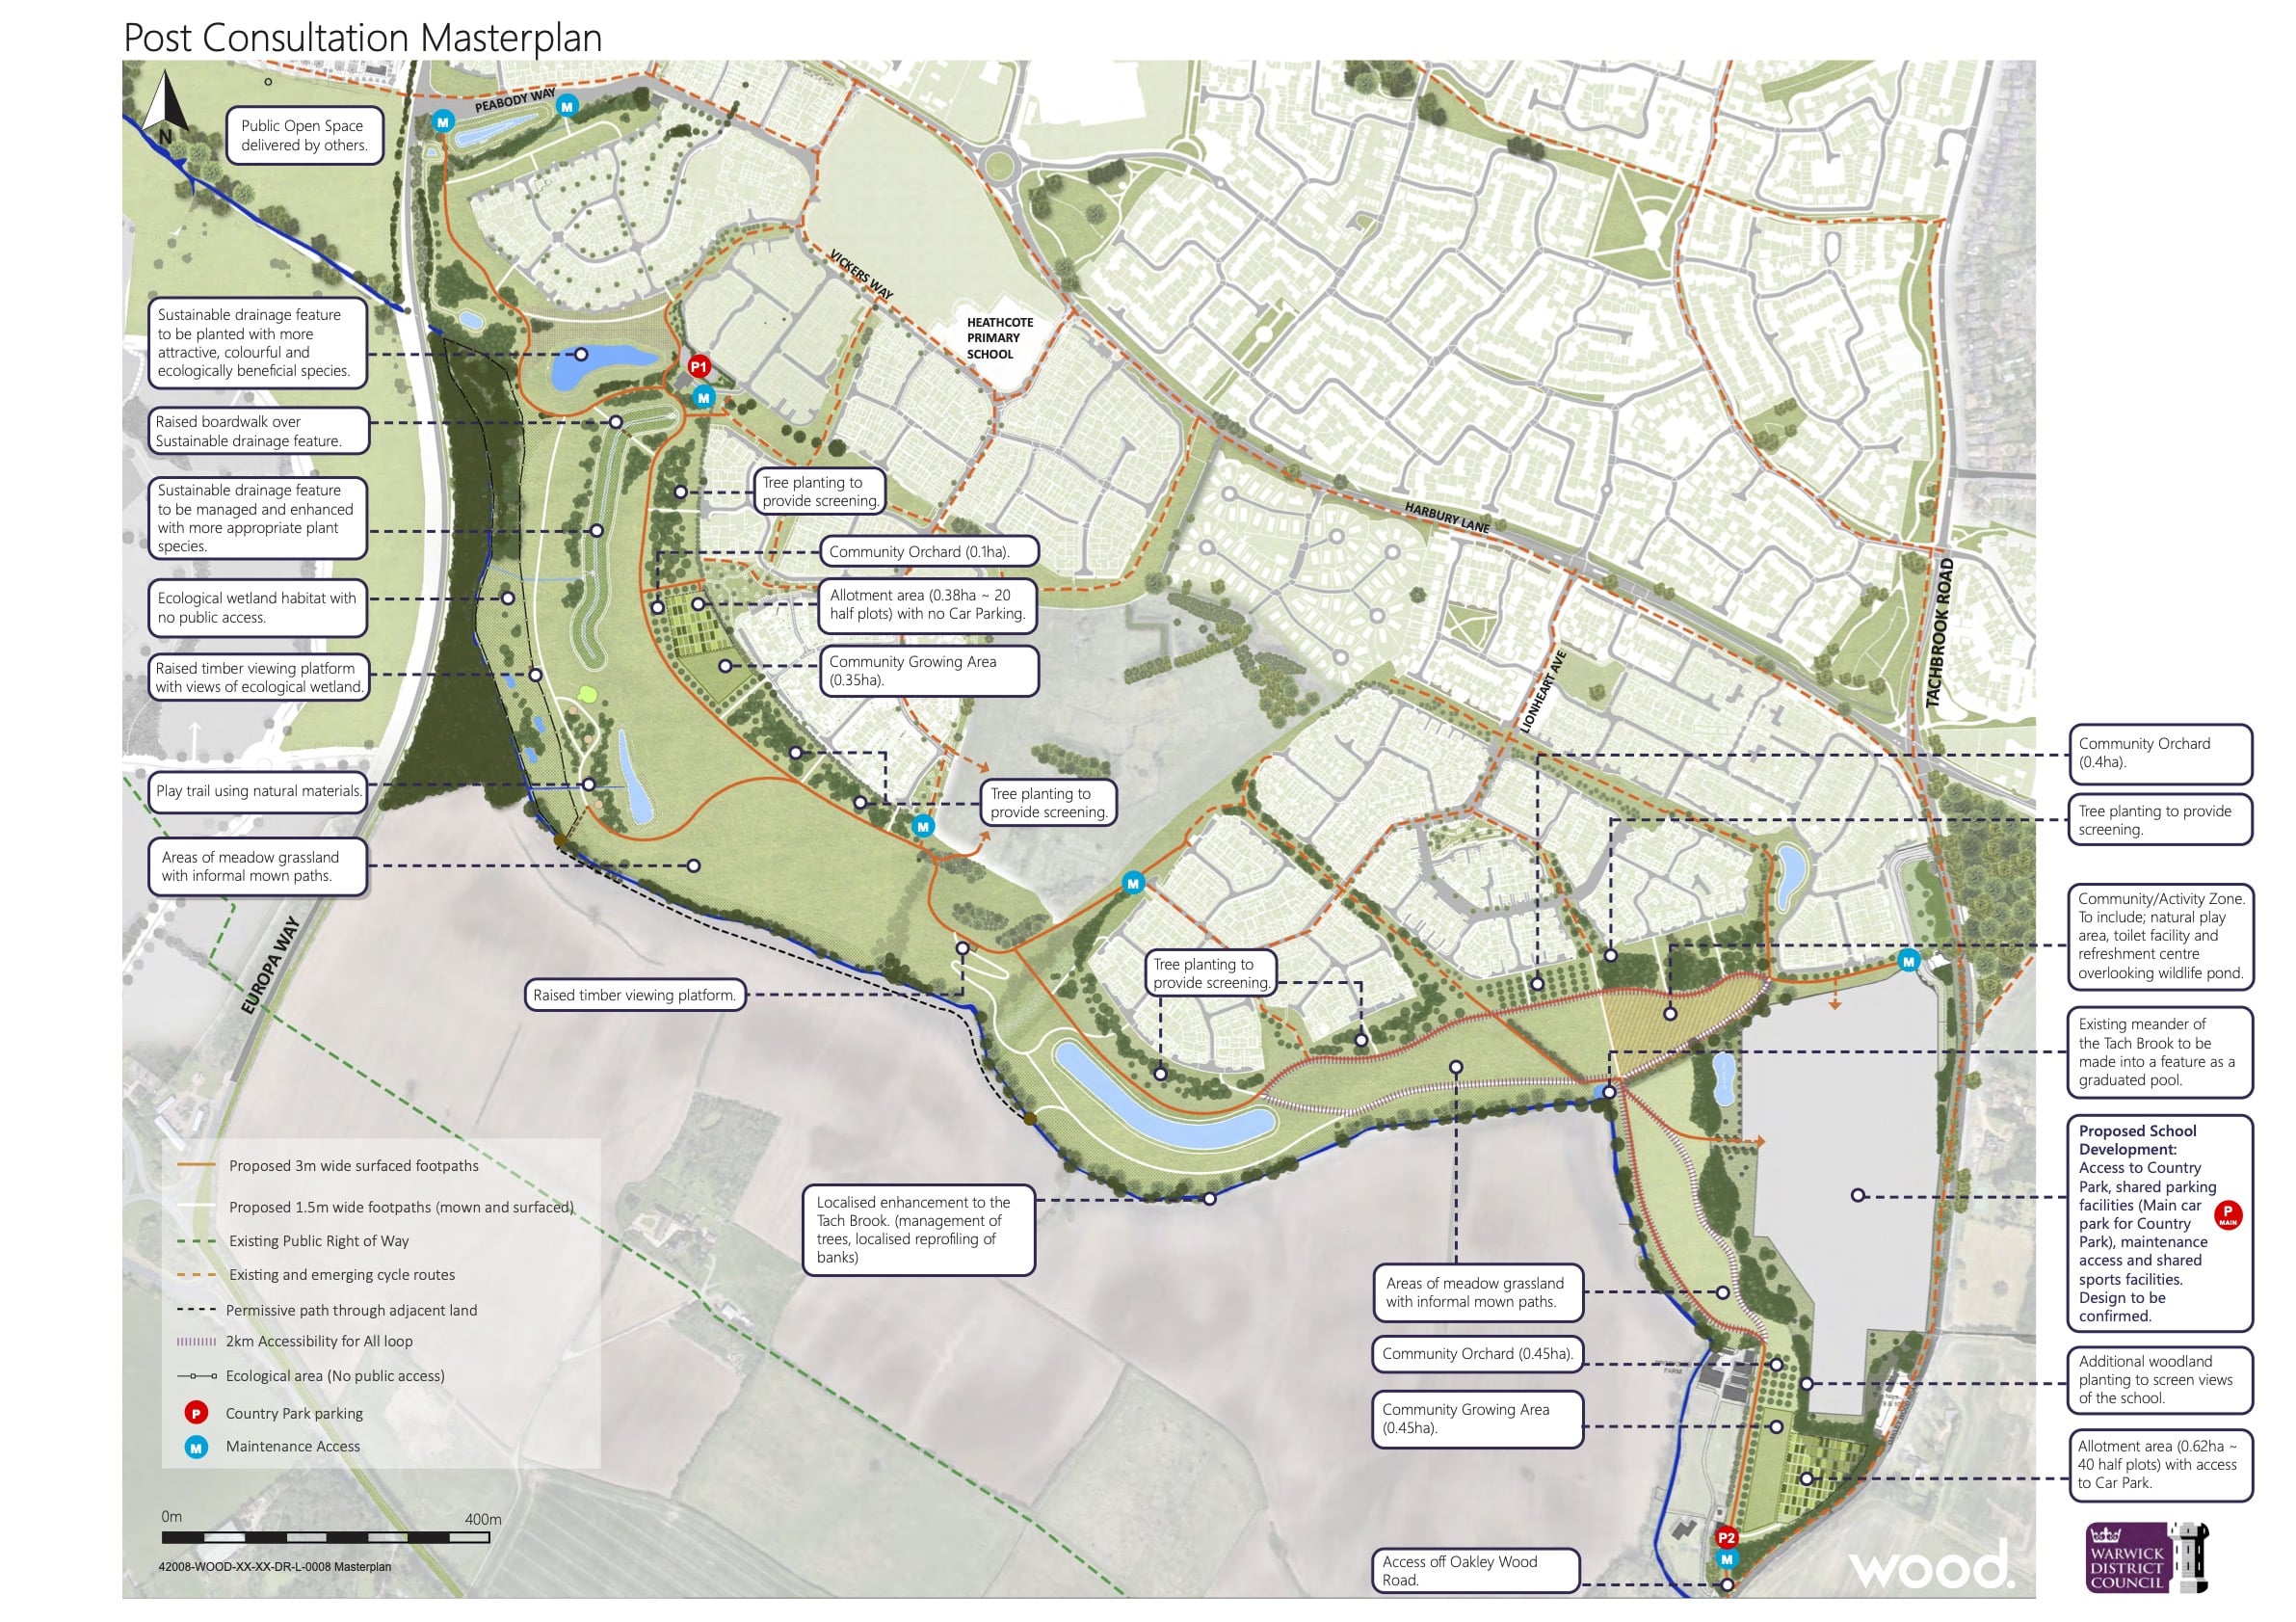 Tachbrook Park Masterplan